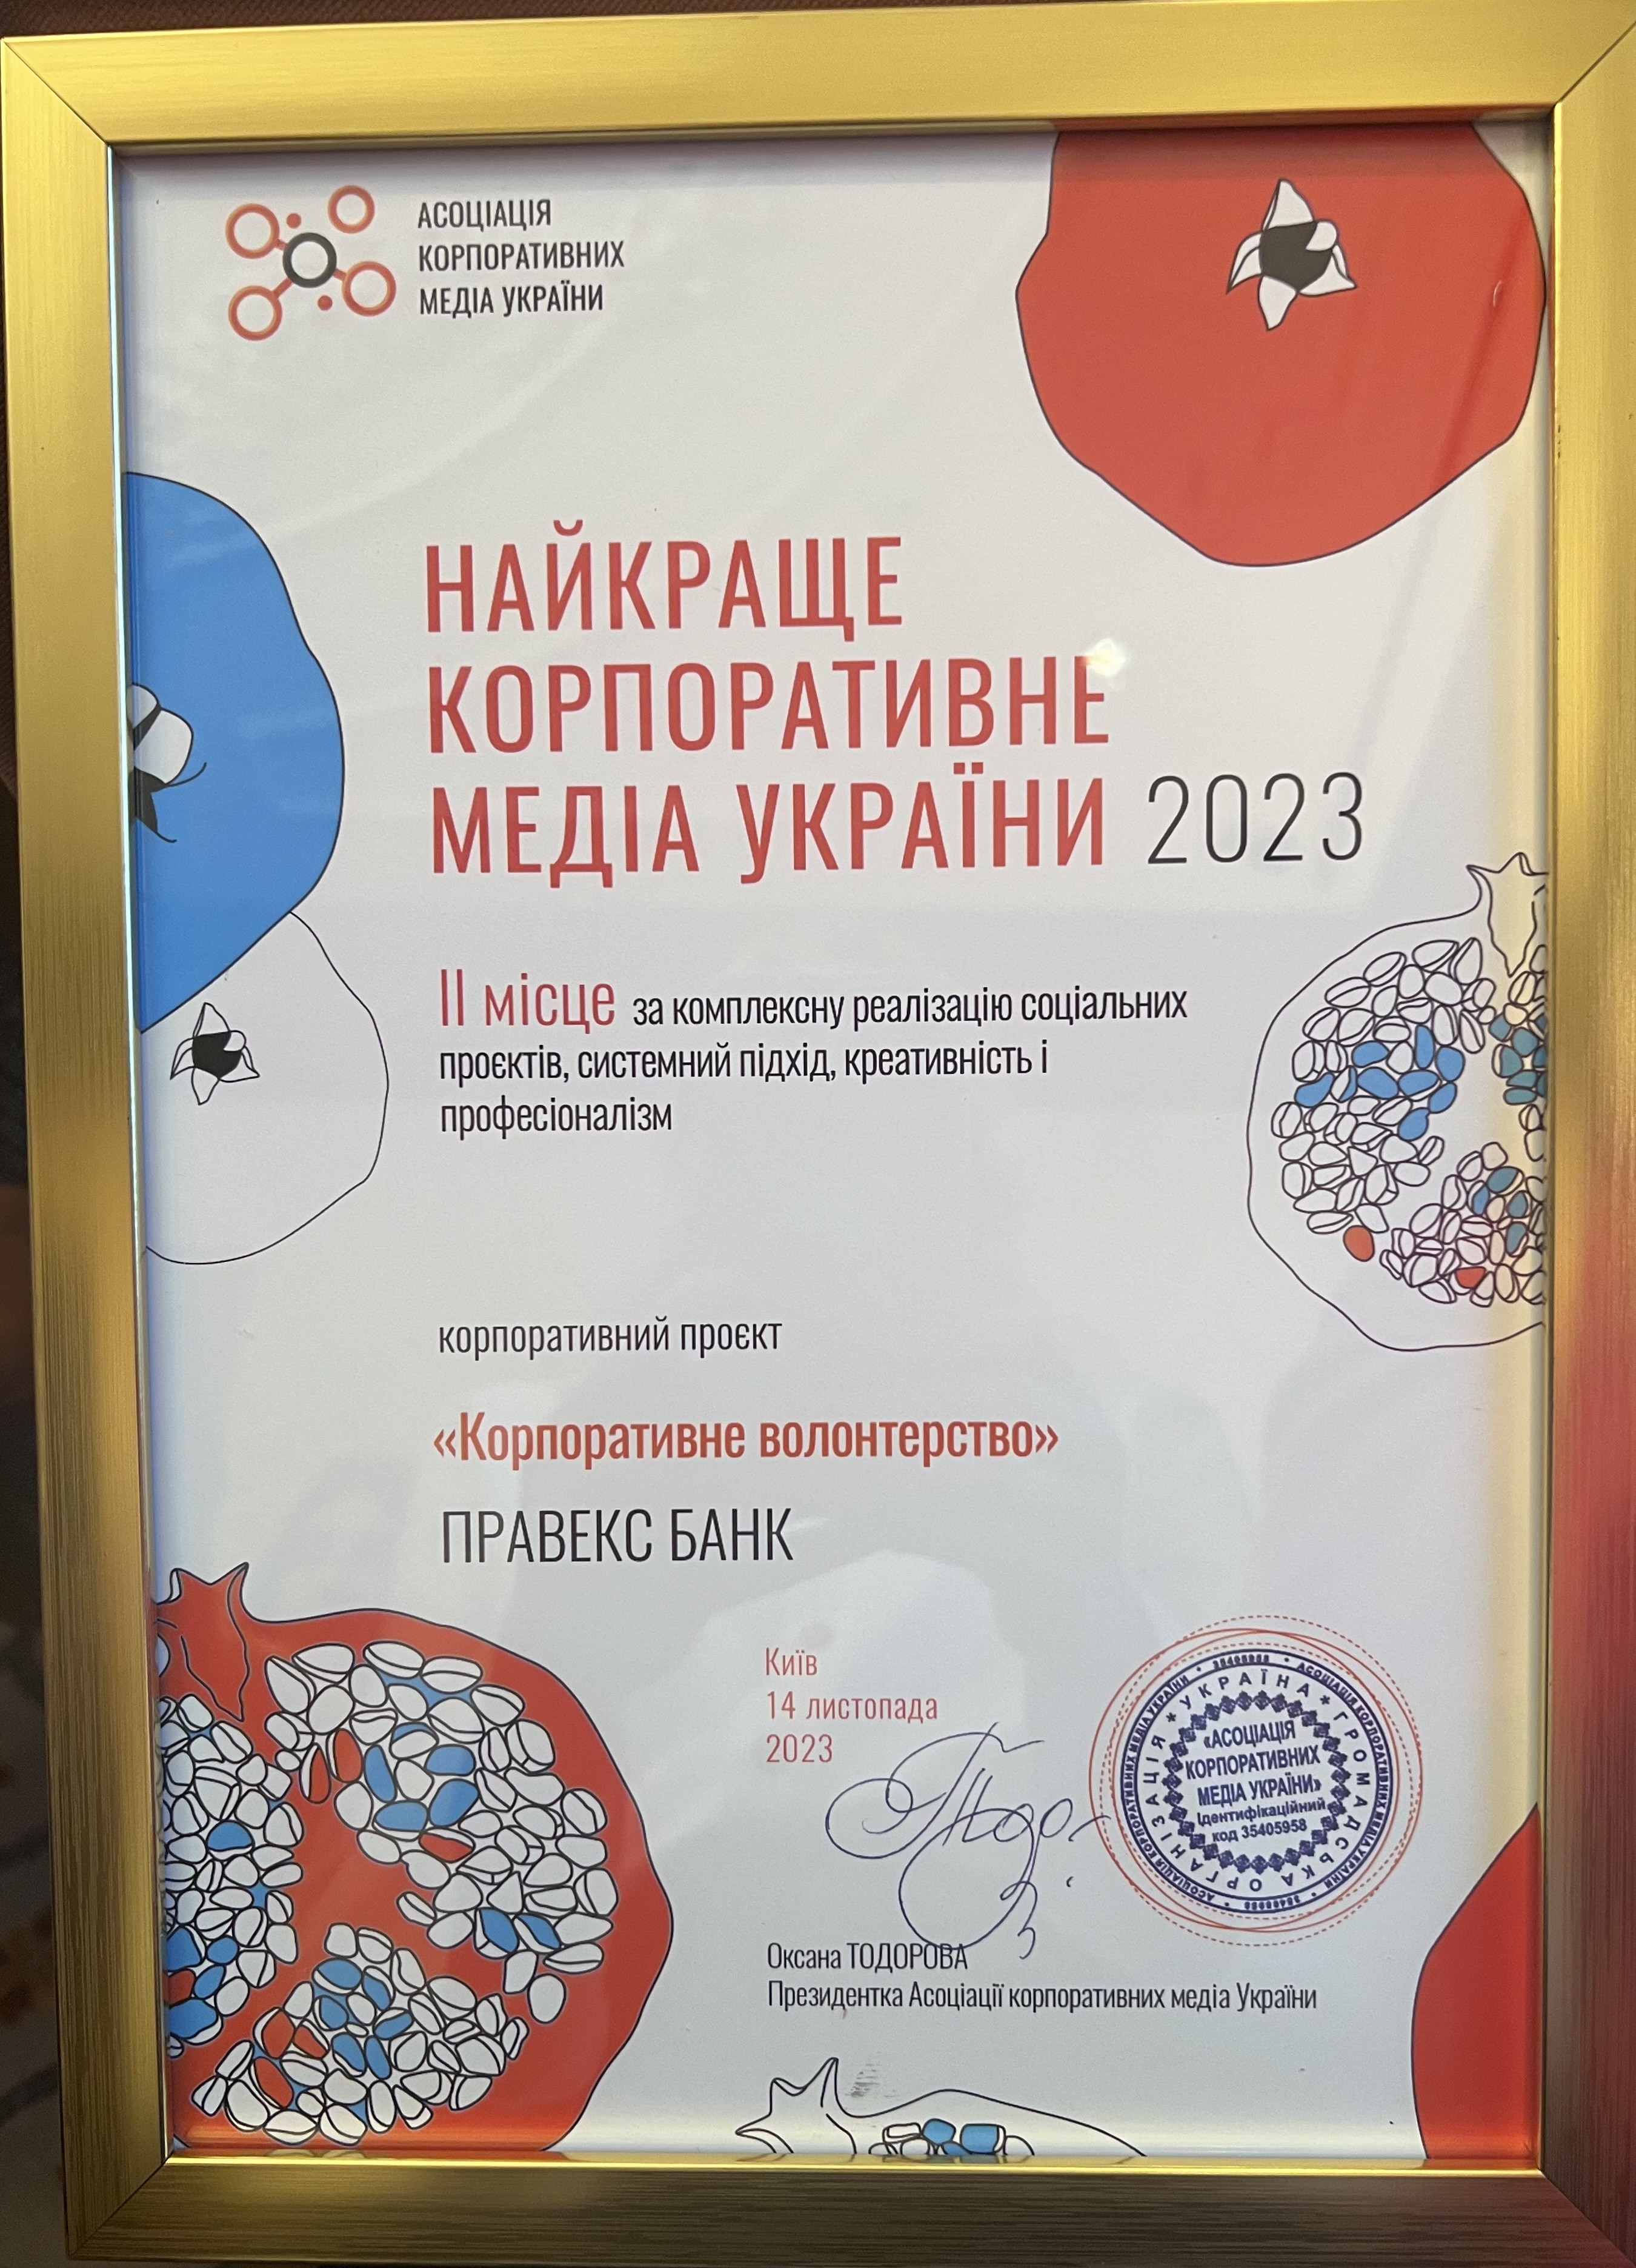 PRAVEX BANK receives the Best Corporate Media of Ukraine 2023 Award